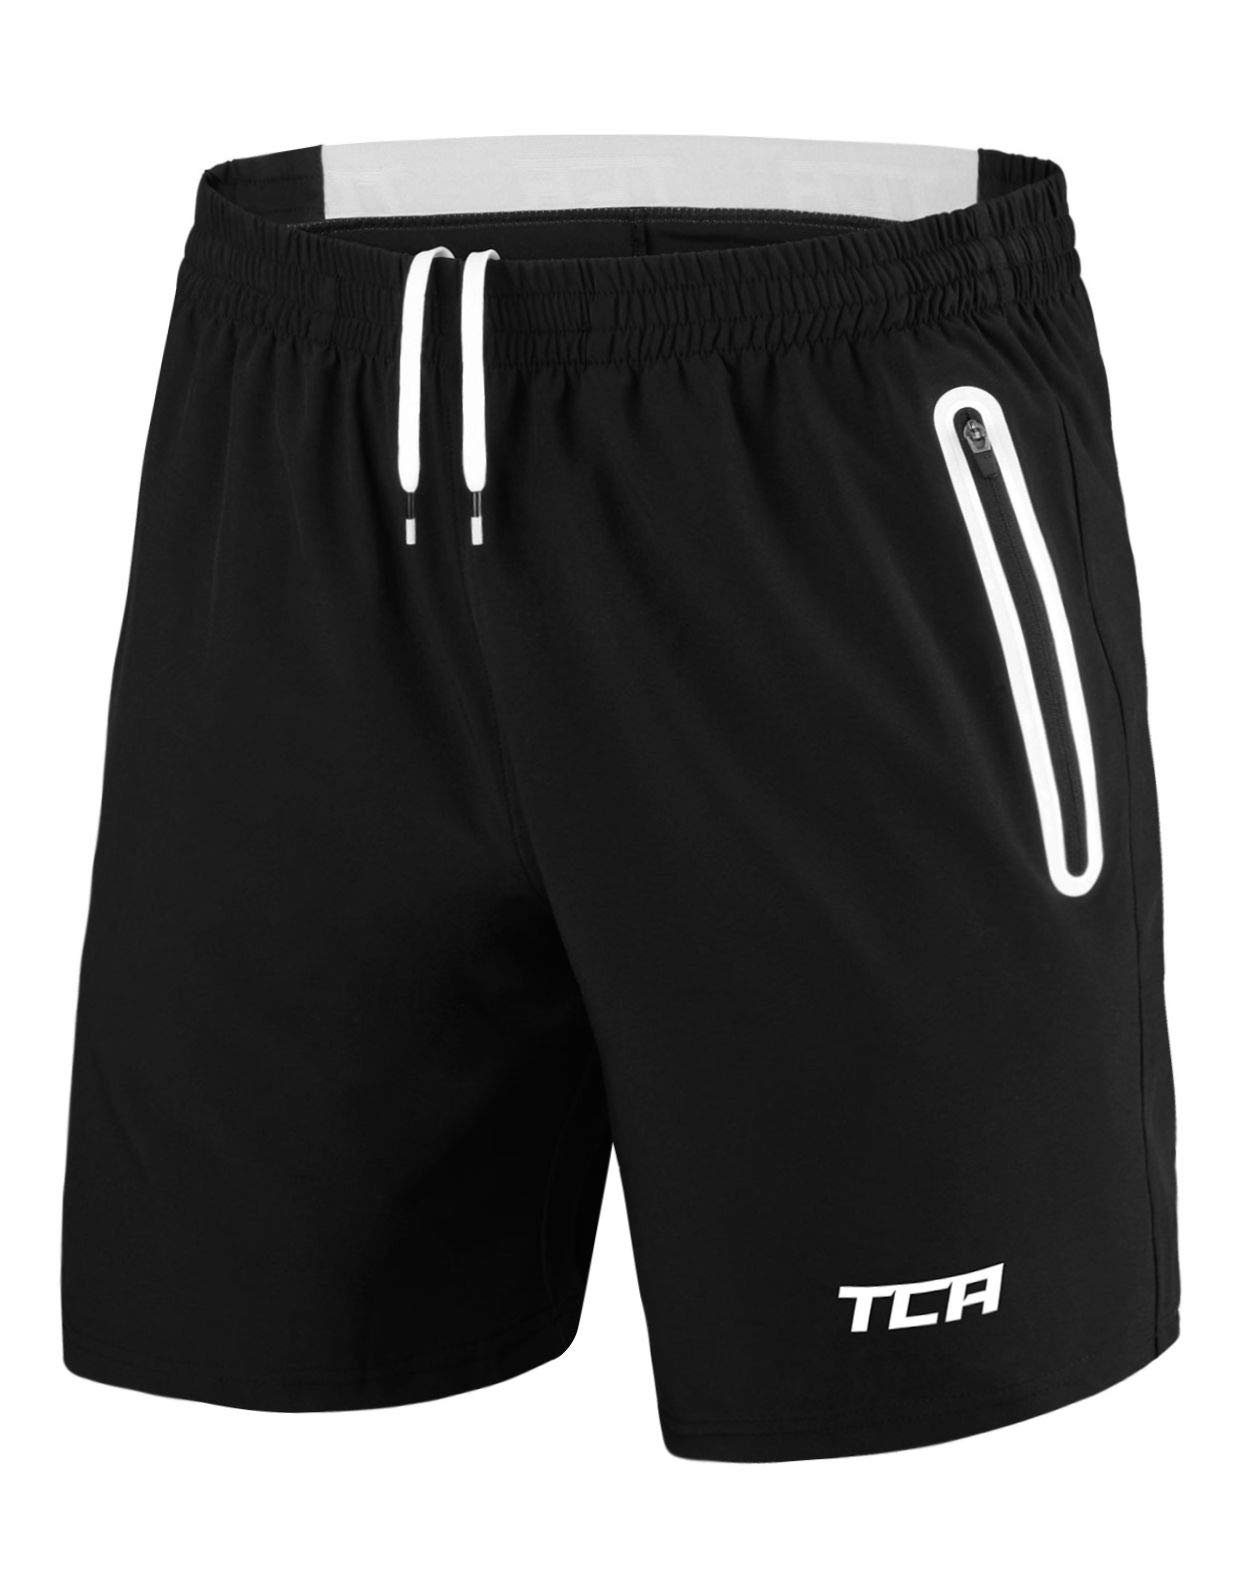 TCA Trainingsshorts TCA Herren Elite Tech Laufhose - Schwarz/Weiss, XL